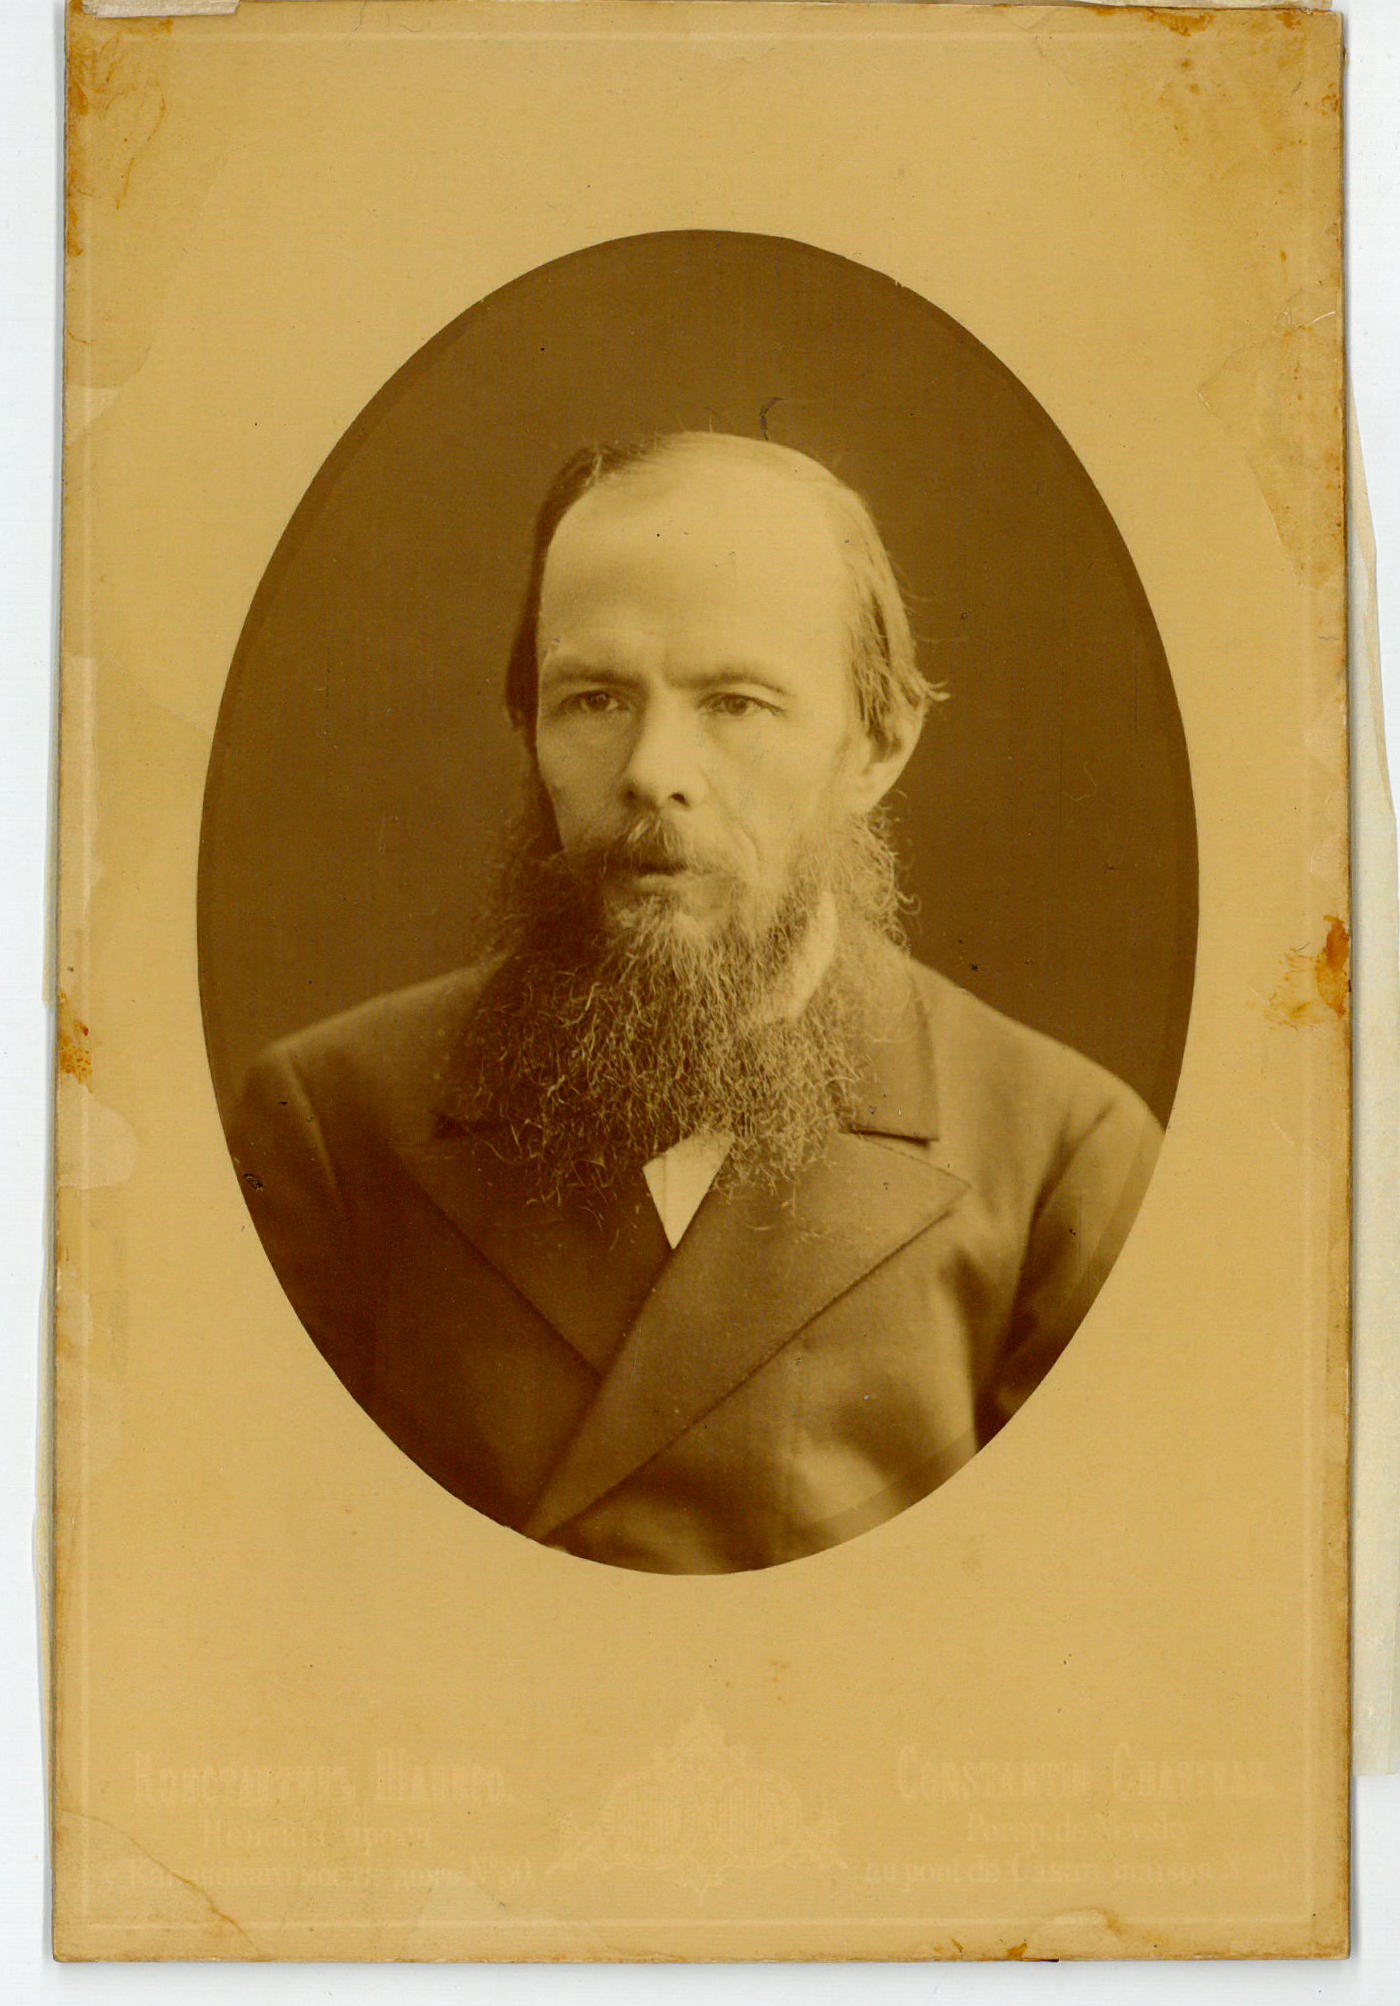 The Friend of the Family by Dostoevsky, Fyodor Mikhailovich